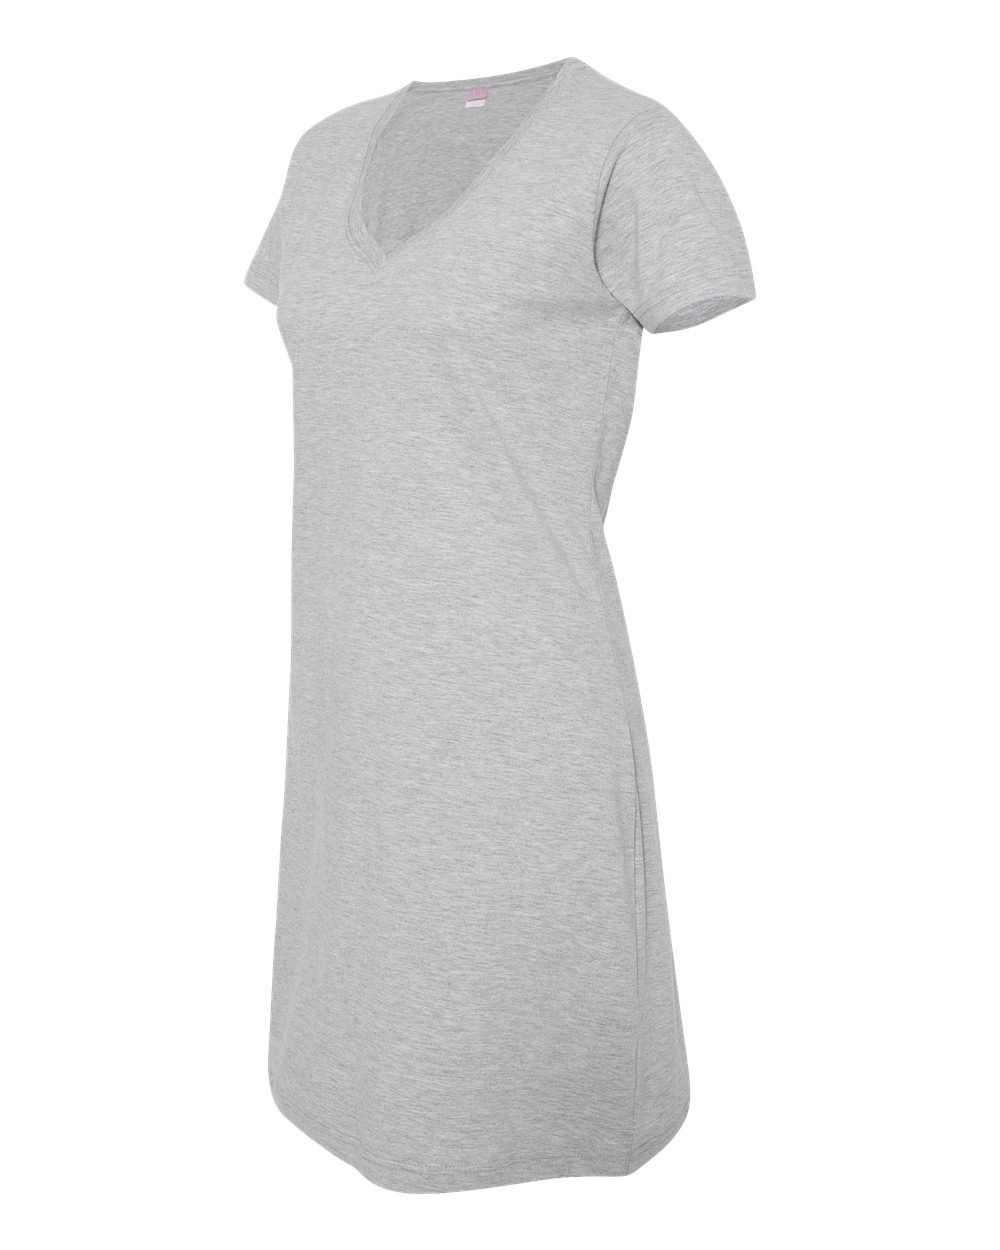 LAT 3522 - Ladies' Fine Jersey V-Neck Coverup $13.15 - T-Shirts